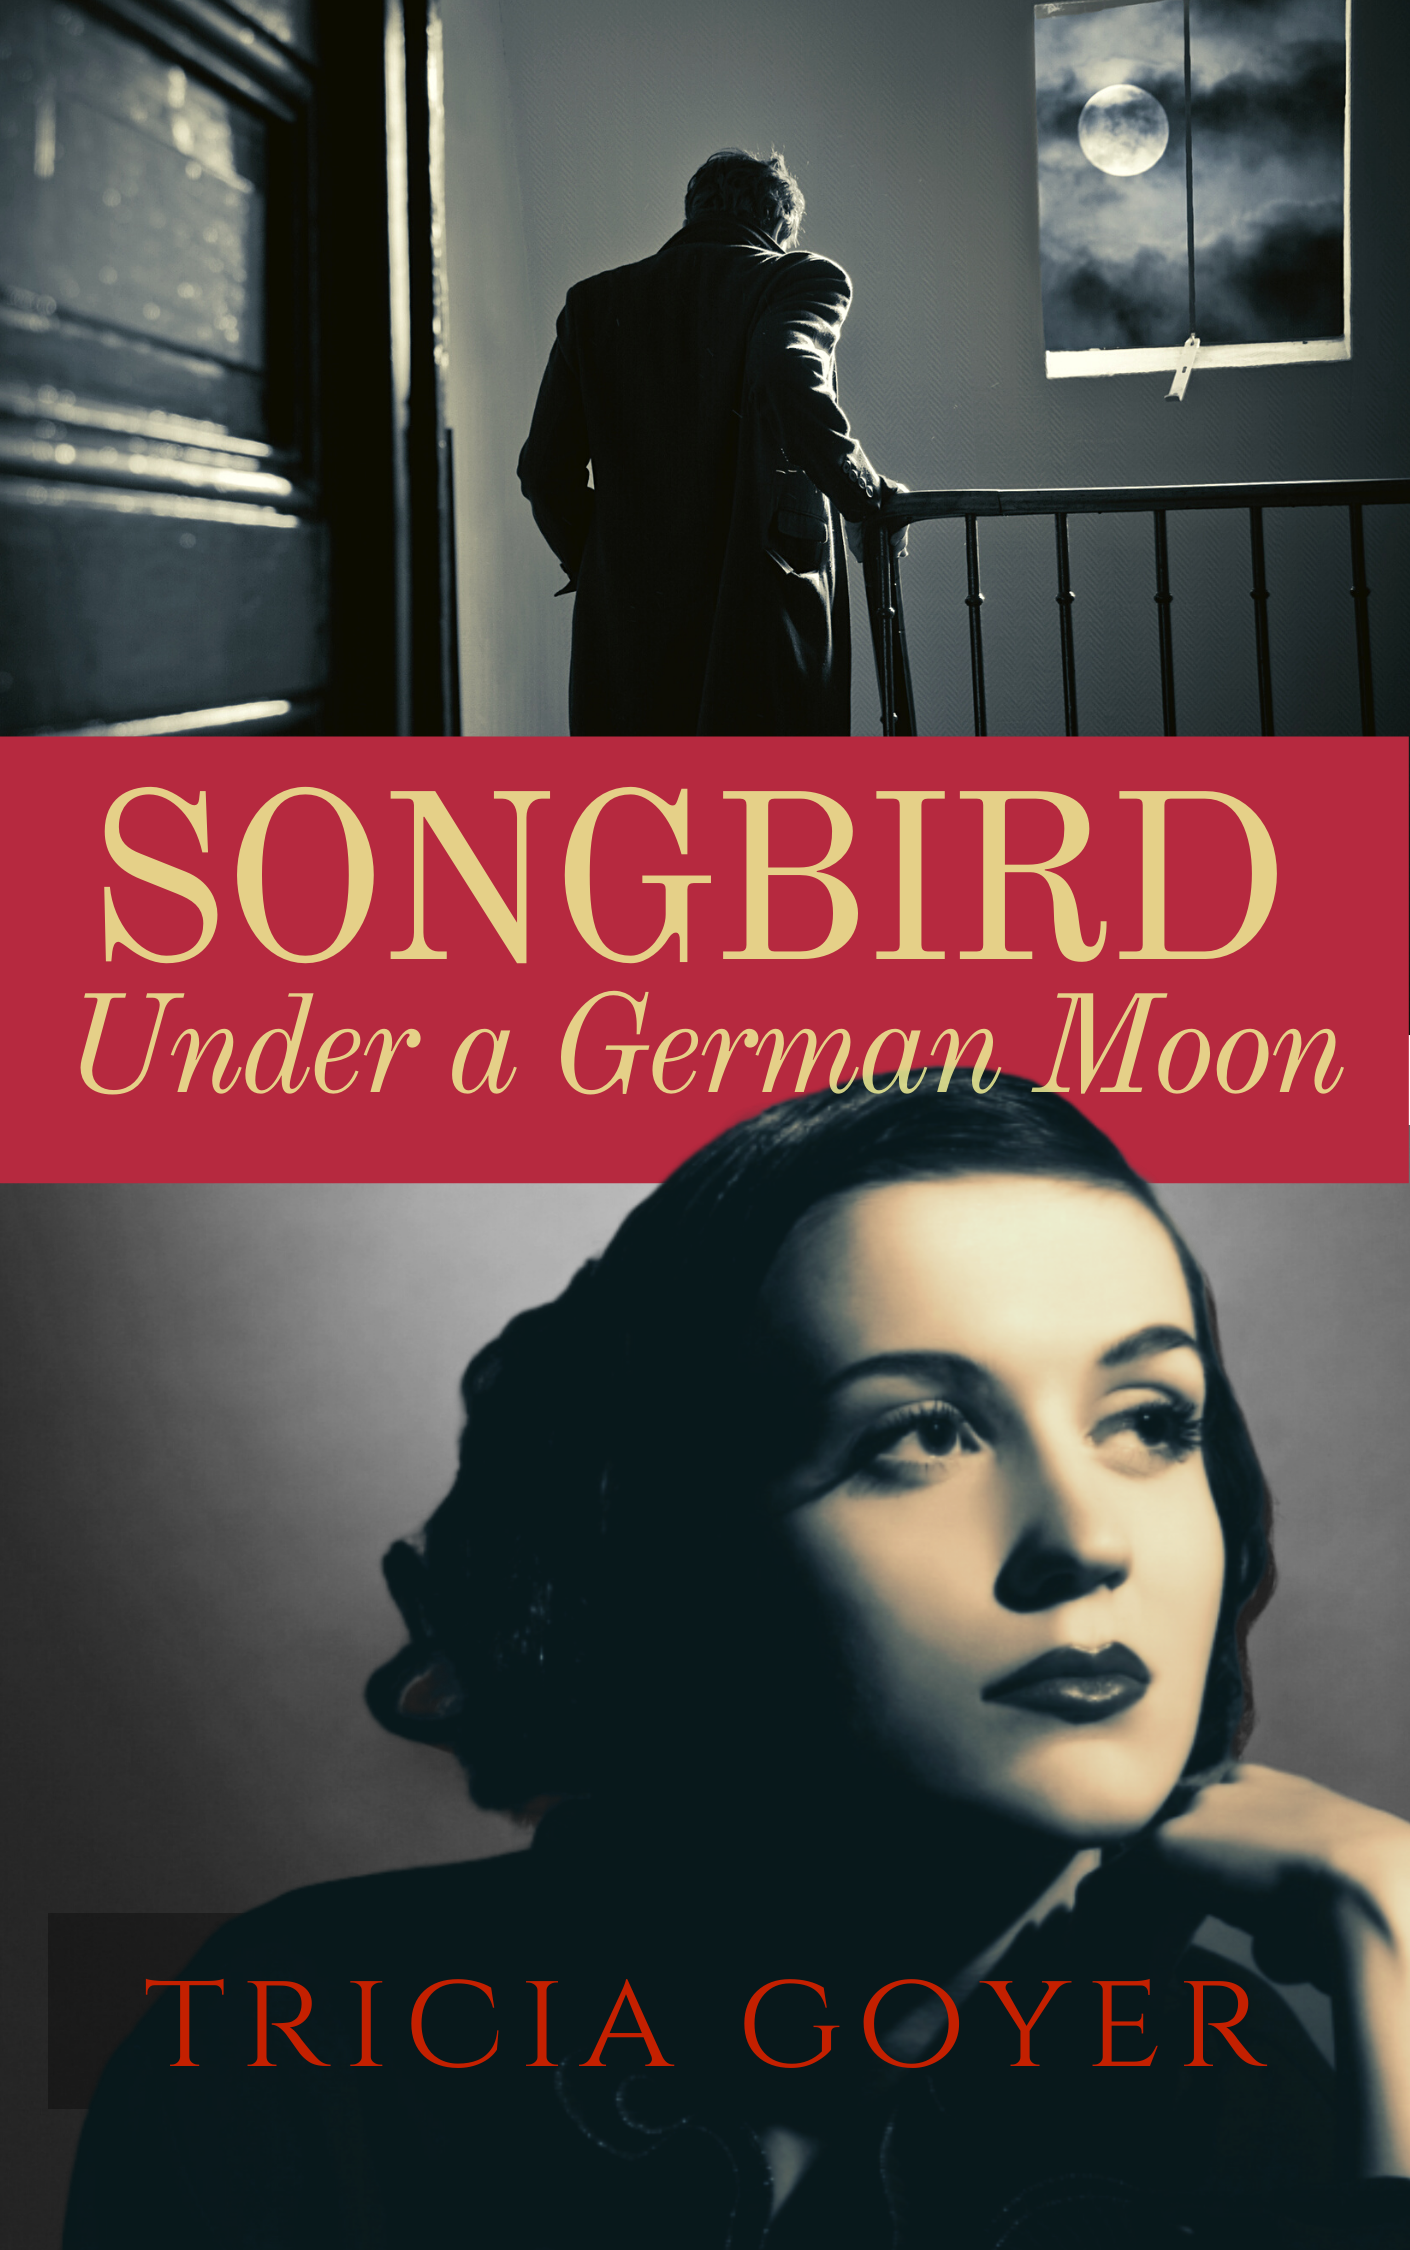 Songbird Under a German Moon by Tricia Goyer